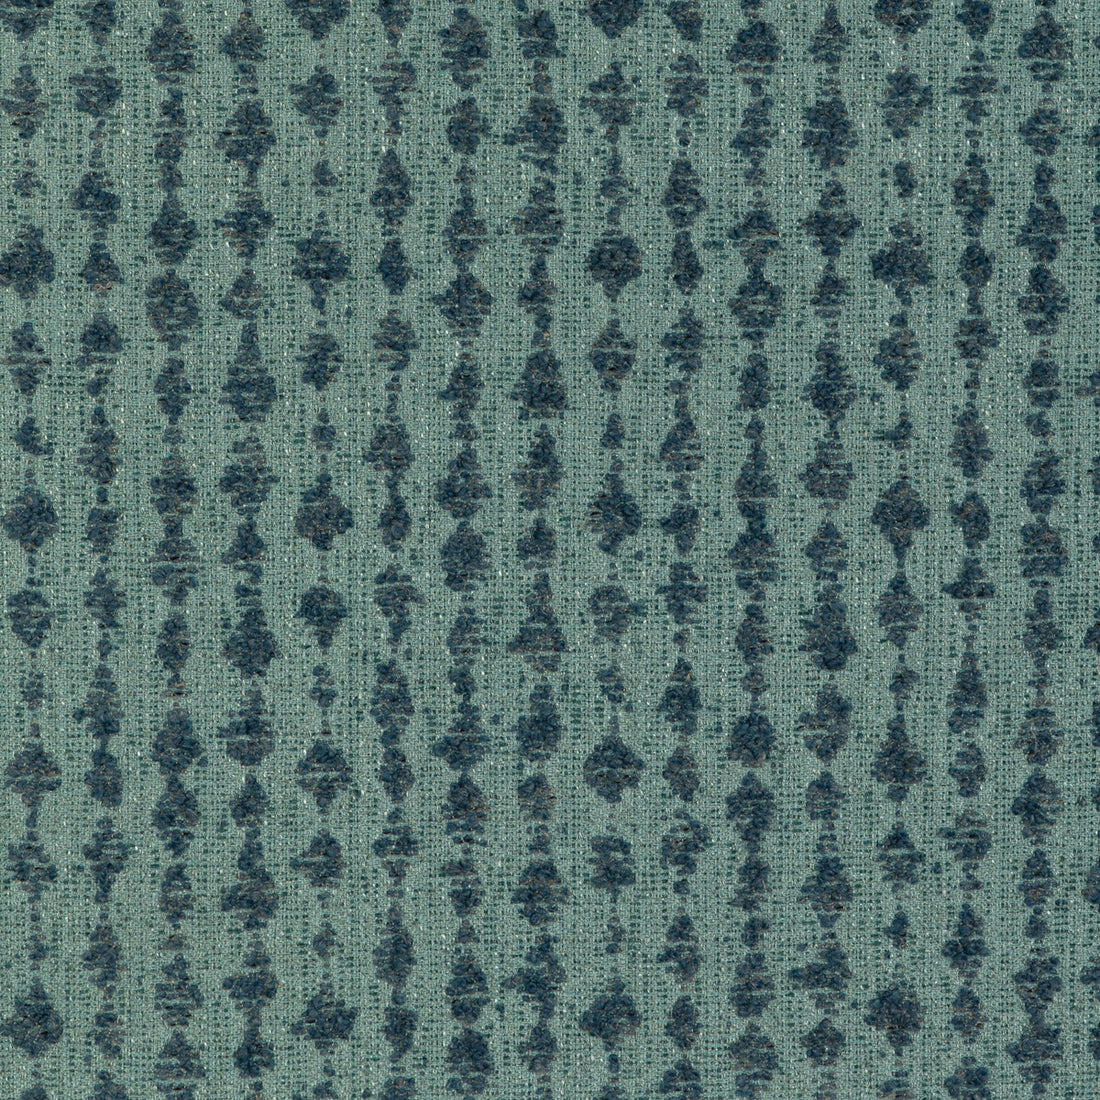 Serai fabric in sky color - pattern GWF-3795.355.0 - by Lee Jofa Modern in the Kelly Wearstler VIII collection